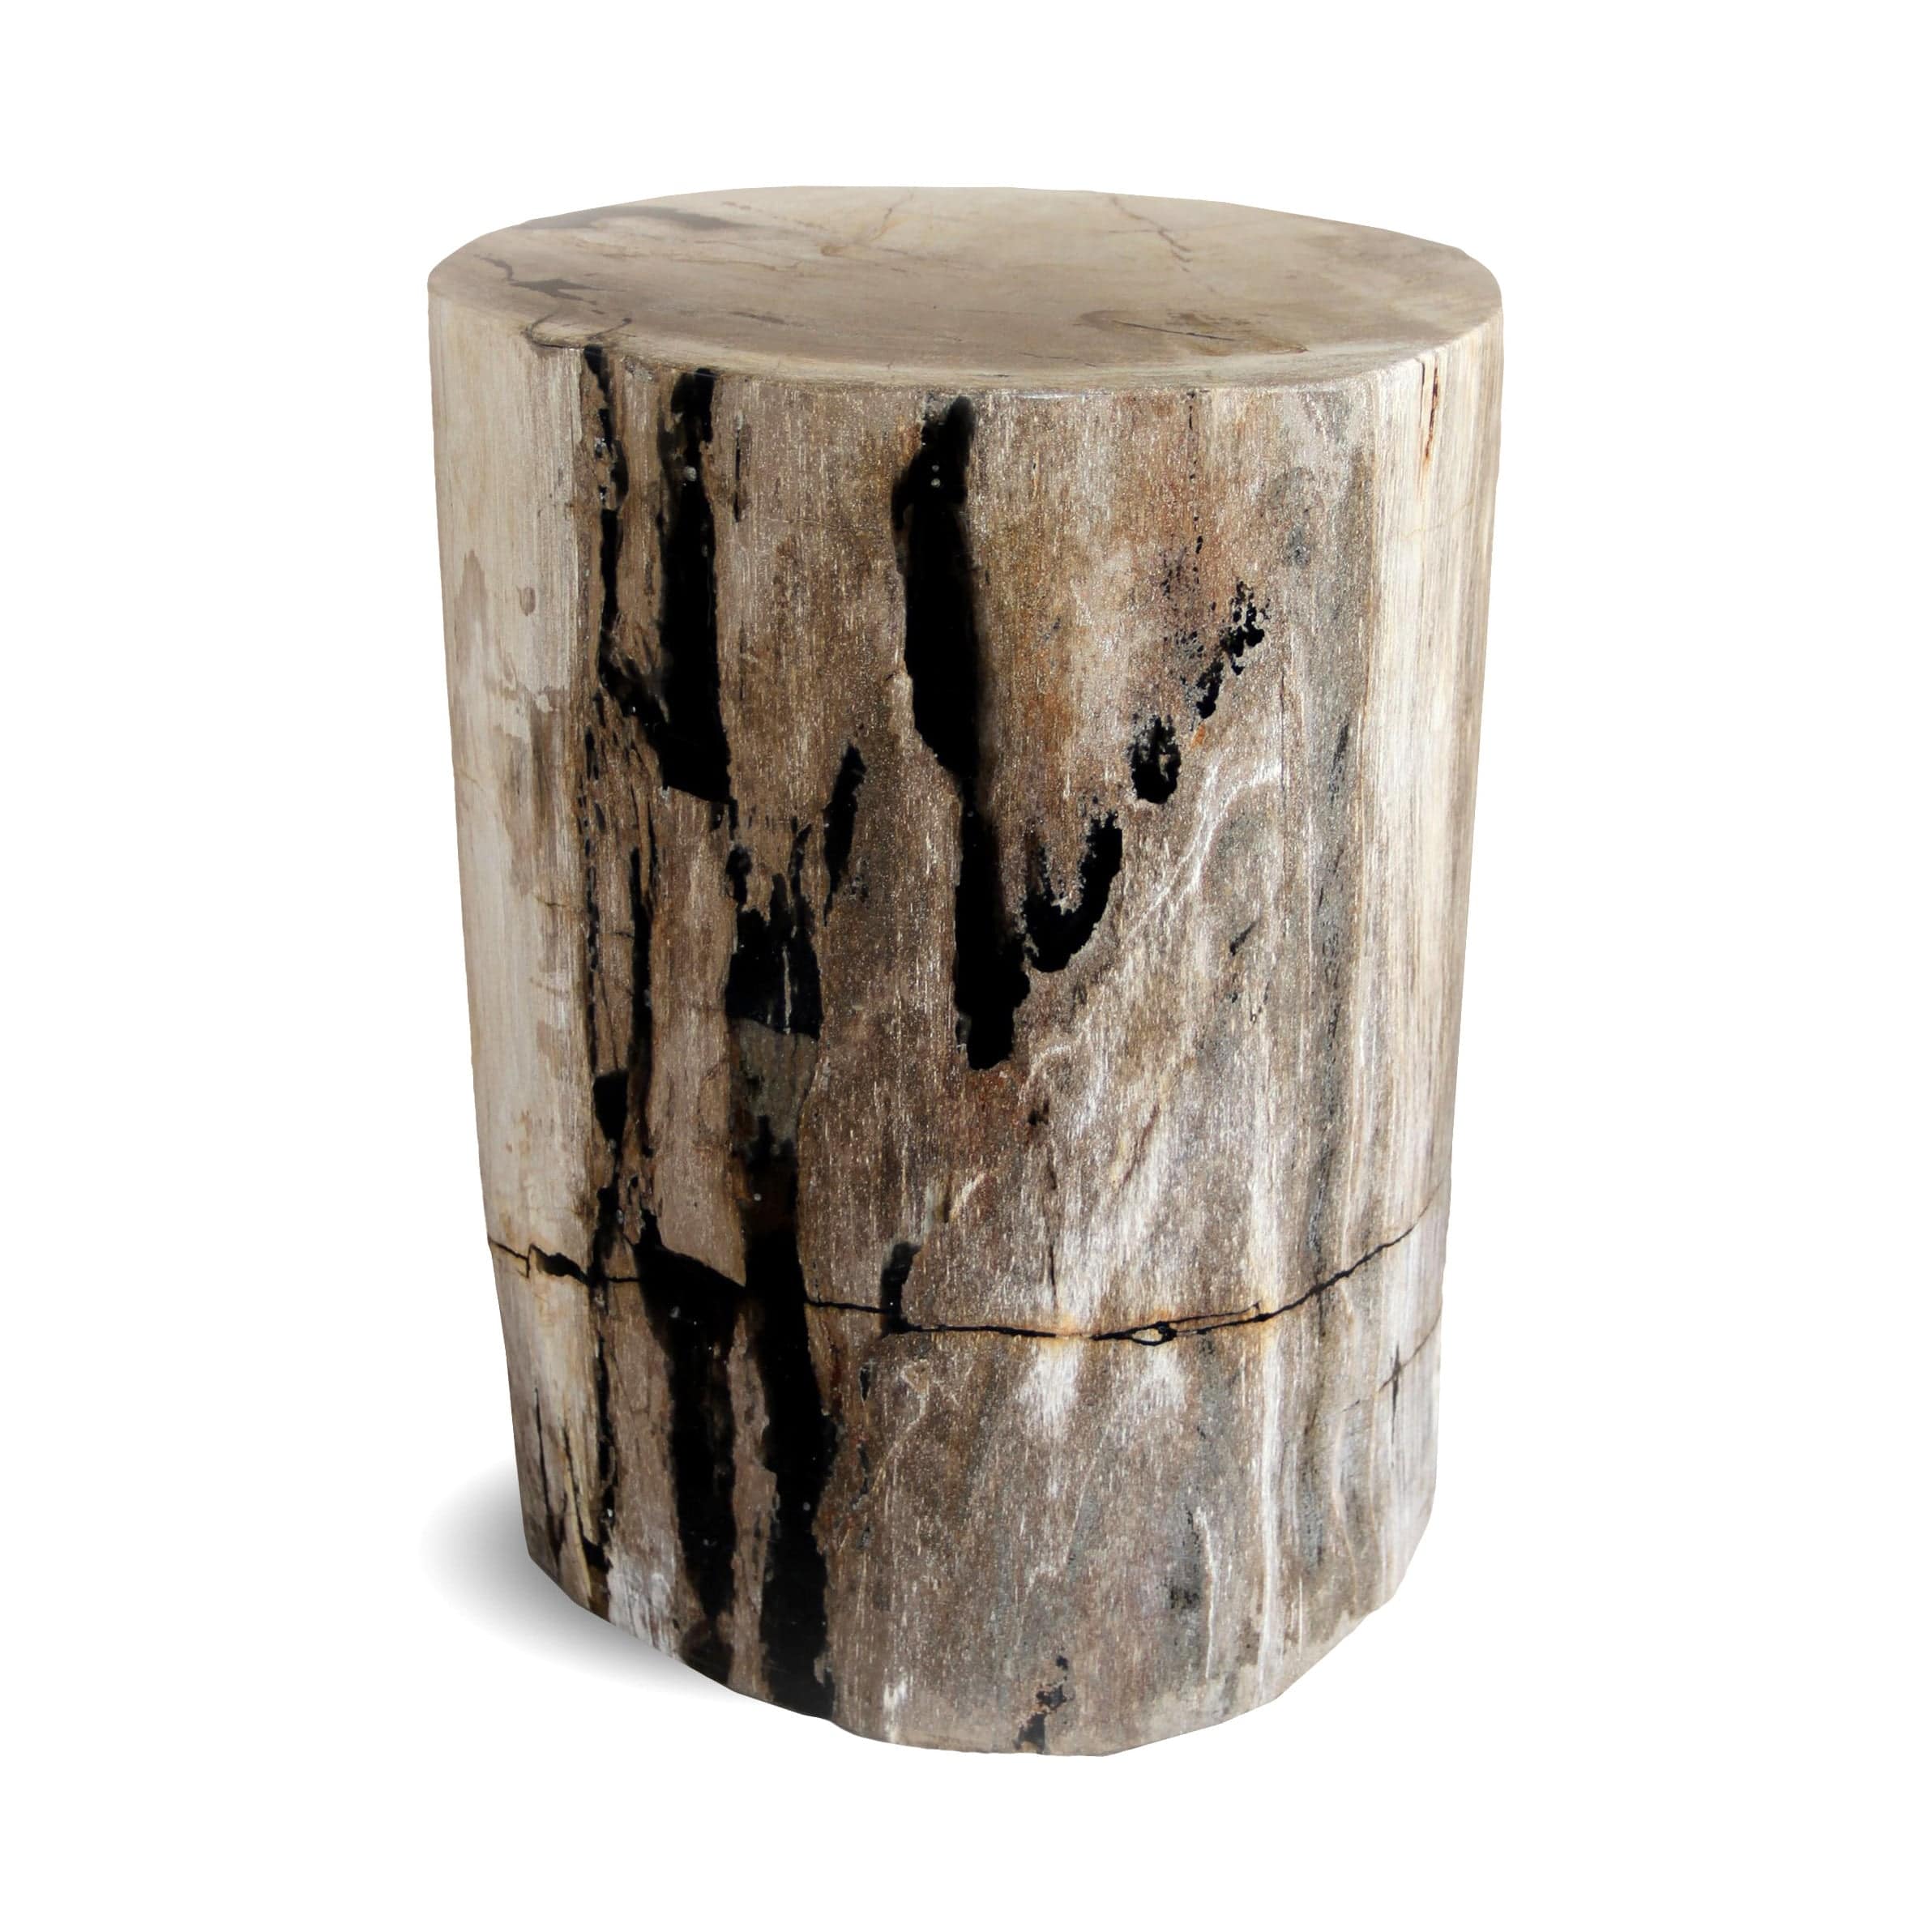 Kalifano Petrified Wood Petrified Wood Round Stump / Stool from Indonesia - 16" / 157 lbs PWS2800.005